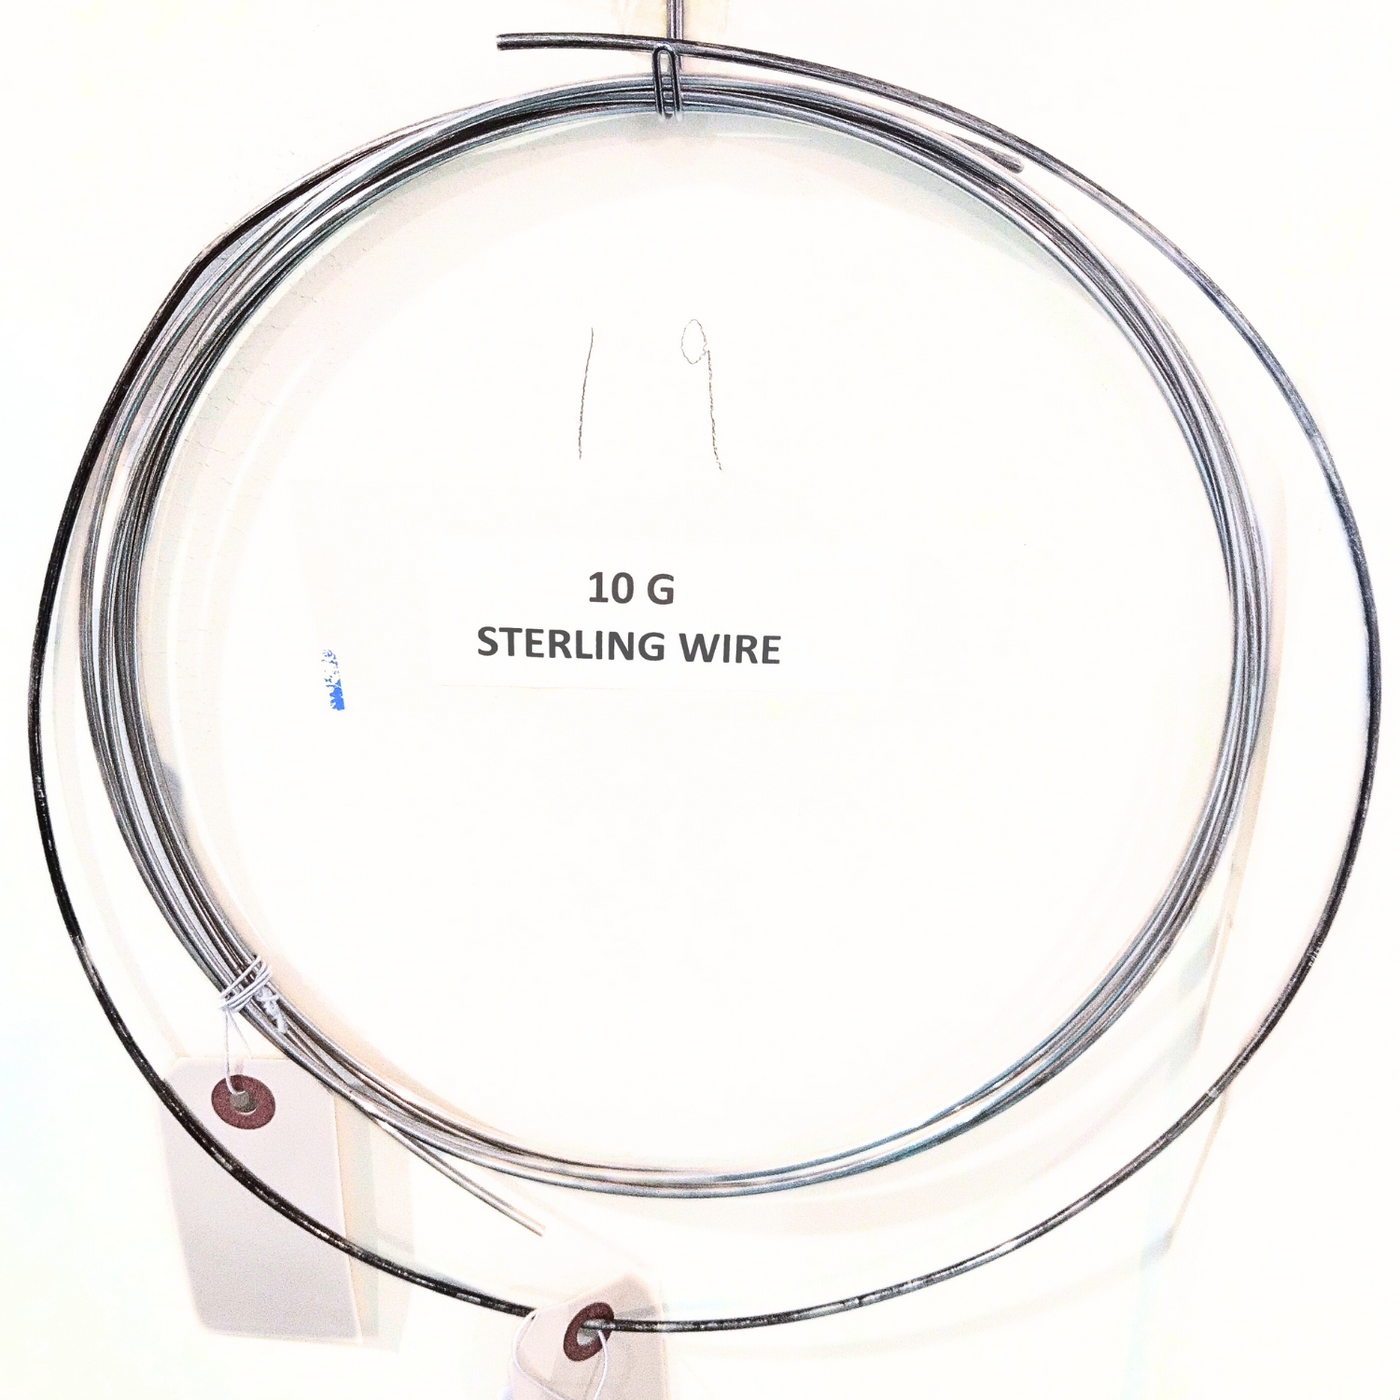 10g Sterling Wire, 1 Inch